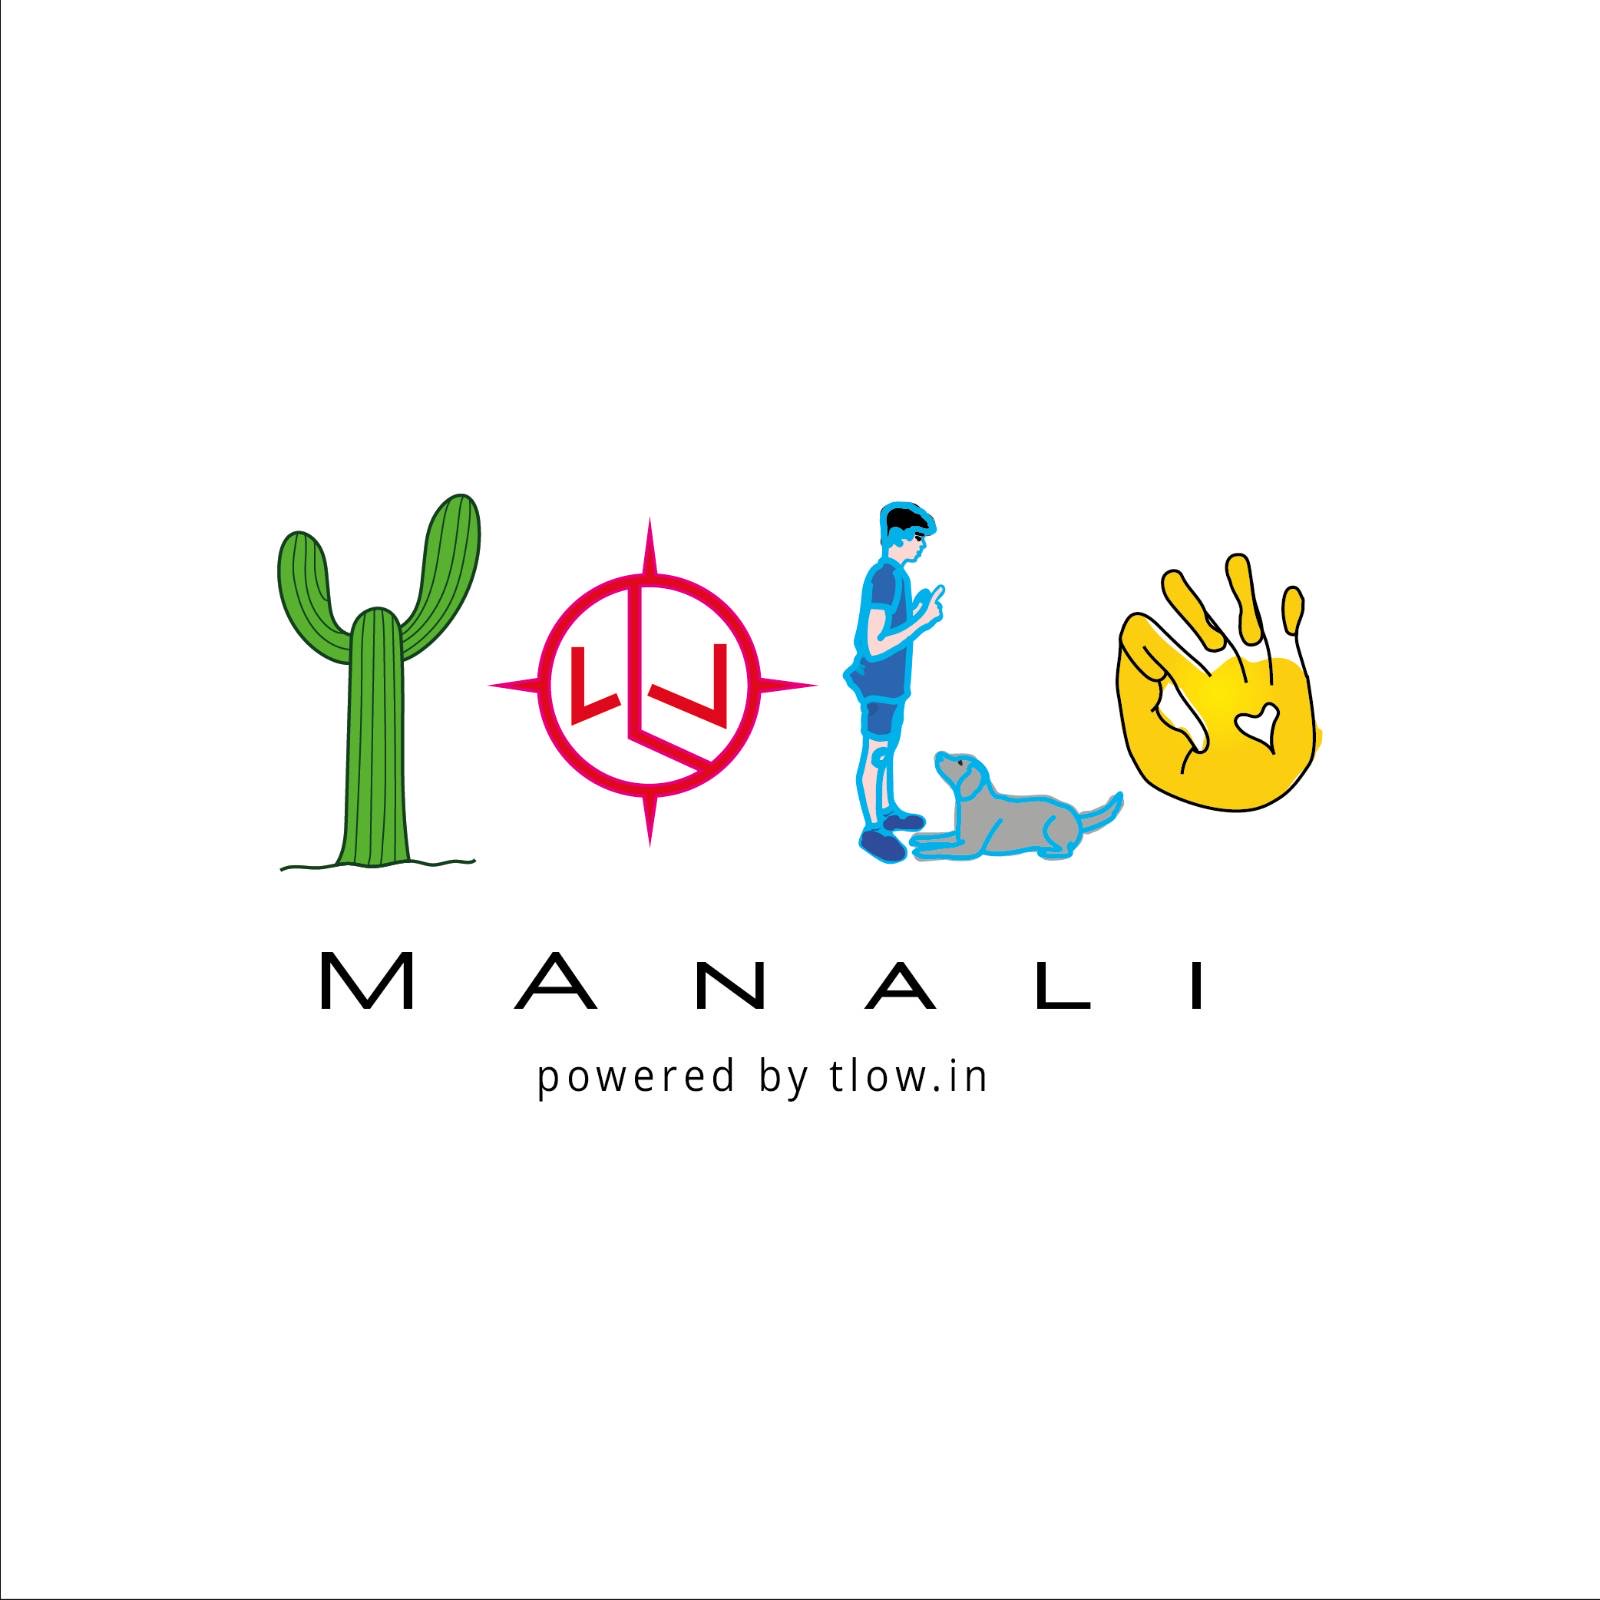 Yolo Manali logo